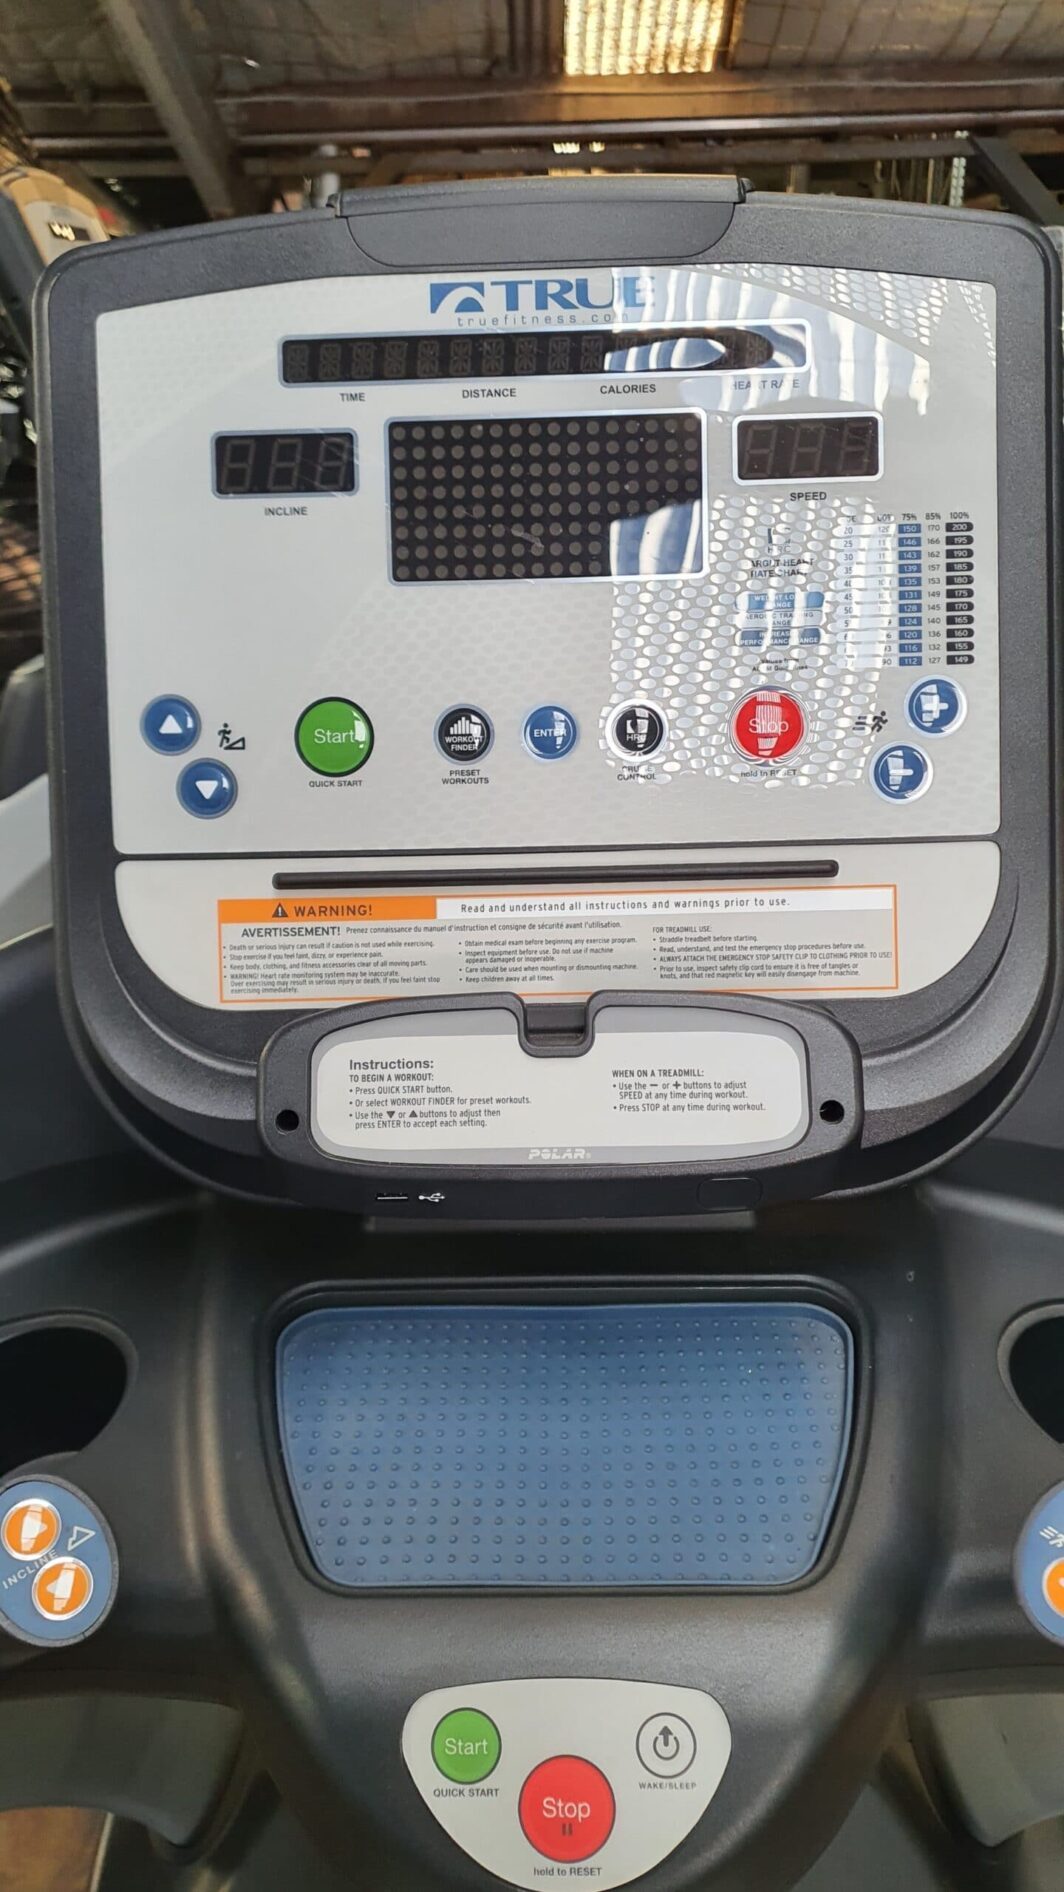 True Fitness 900 Treadmill user view